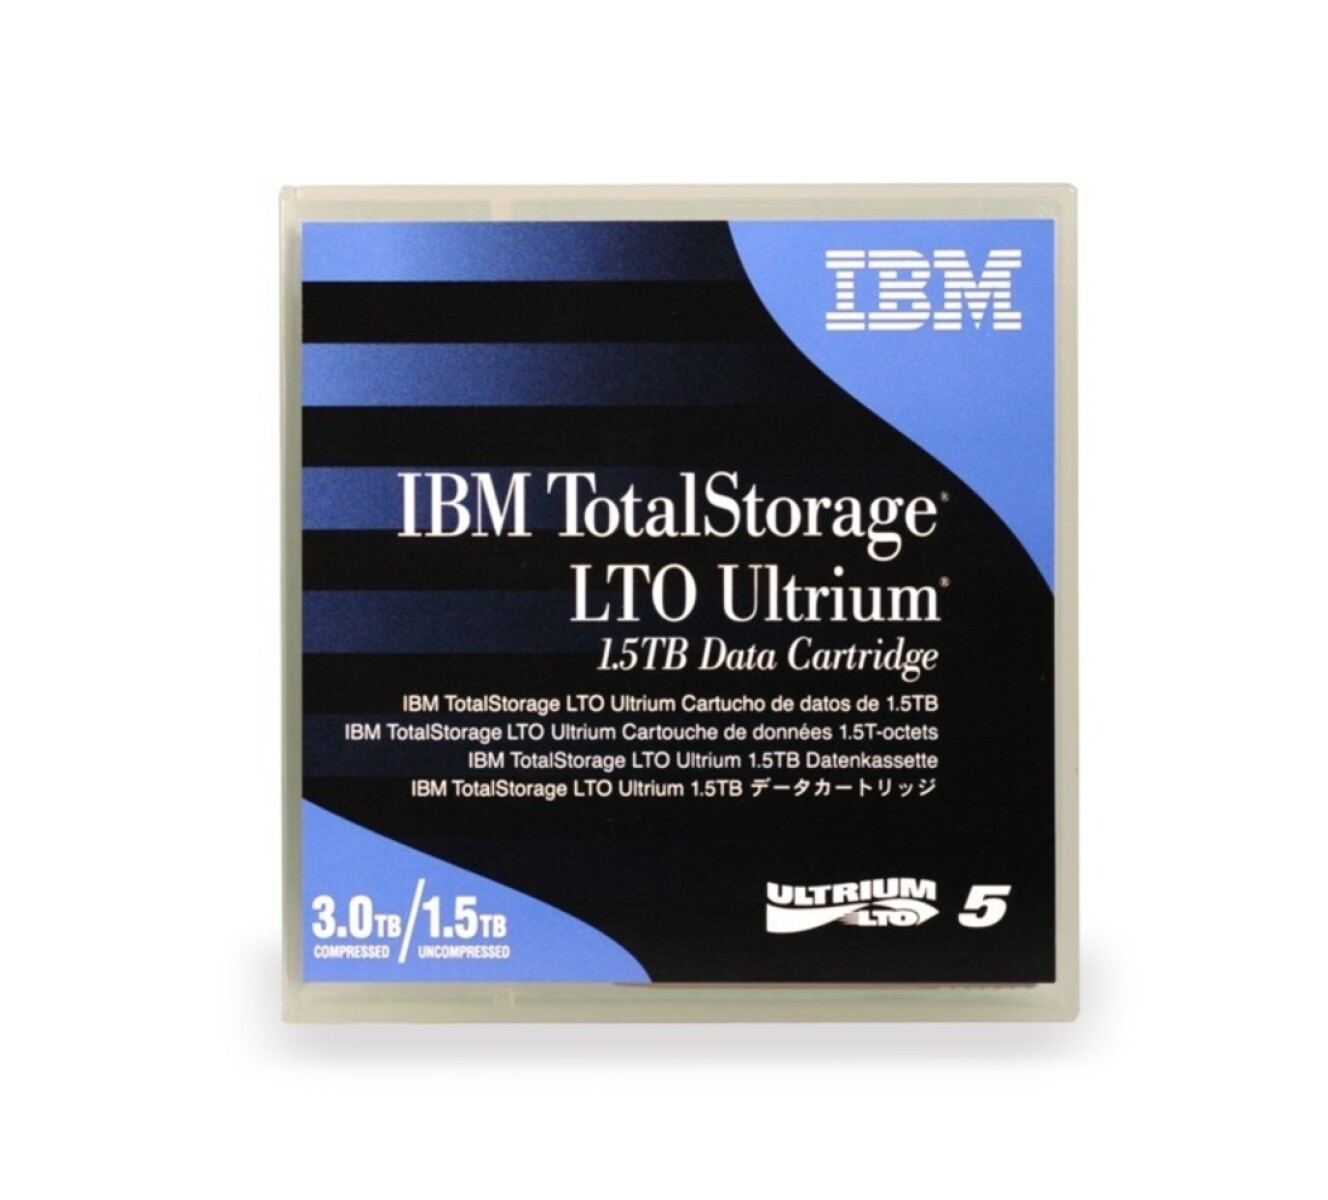 IBM CINTA ULTRIUM LTO 5 46X1290 1.5TB/3.0TB - Ibm Cinta Ultrium Lto 5 46x1290 1.5tb/3.0tb 